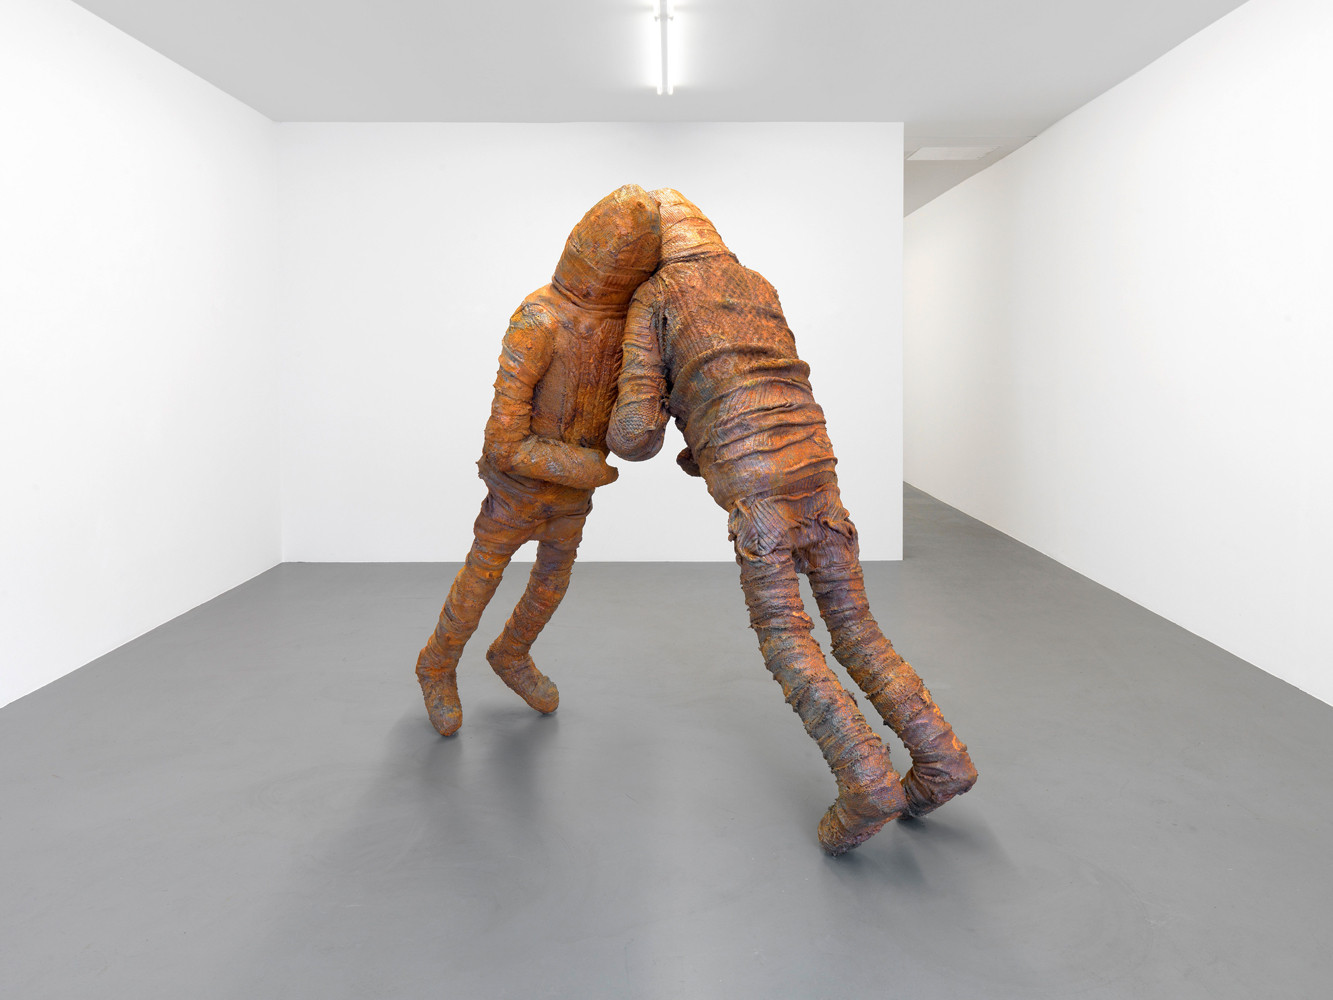 Des Hughes, ‘Rust never sleeps’, Installation view, 2013